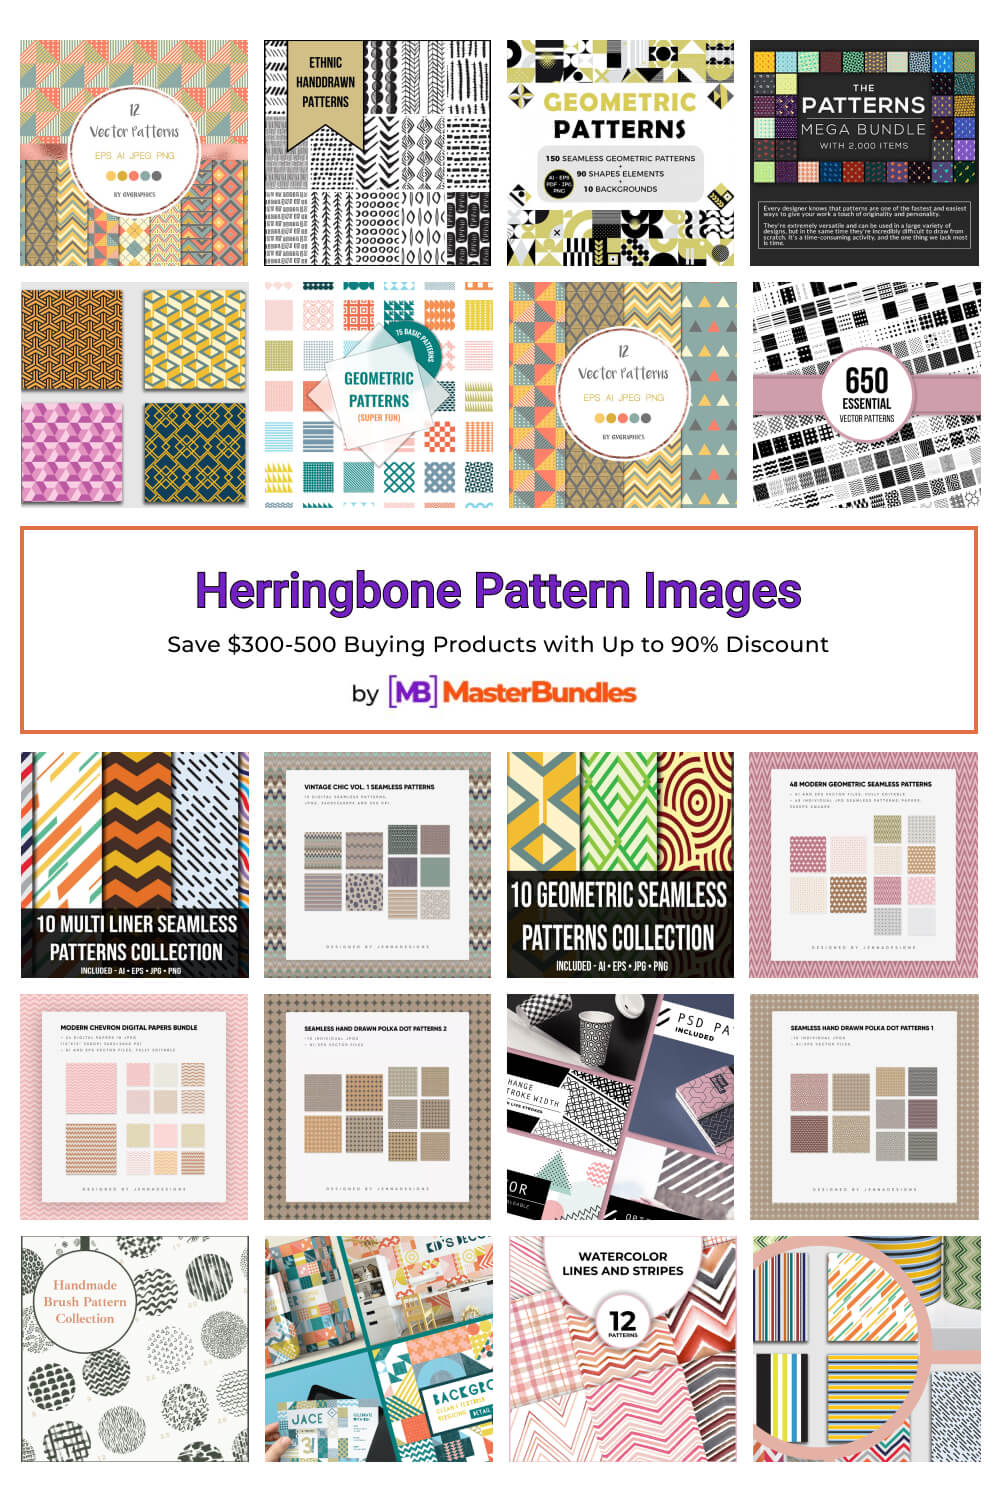 herringbone pattern images pinterest image.